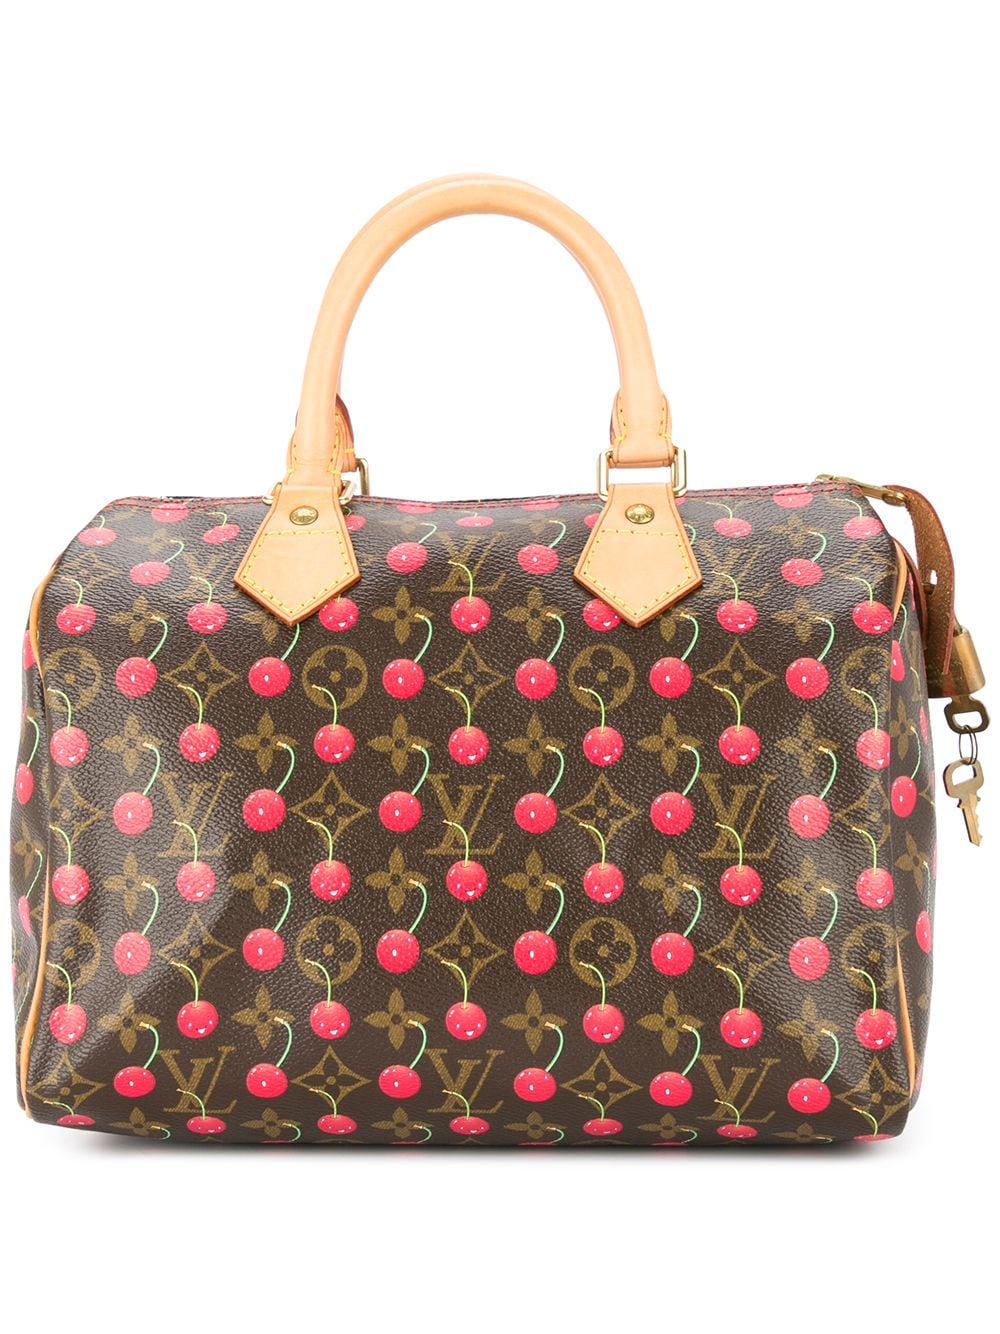 Louis Vuitton Speedy 25 Cherry Monogram Bag - Farfetch